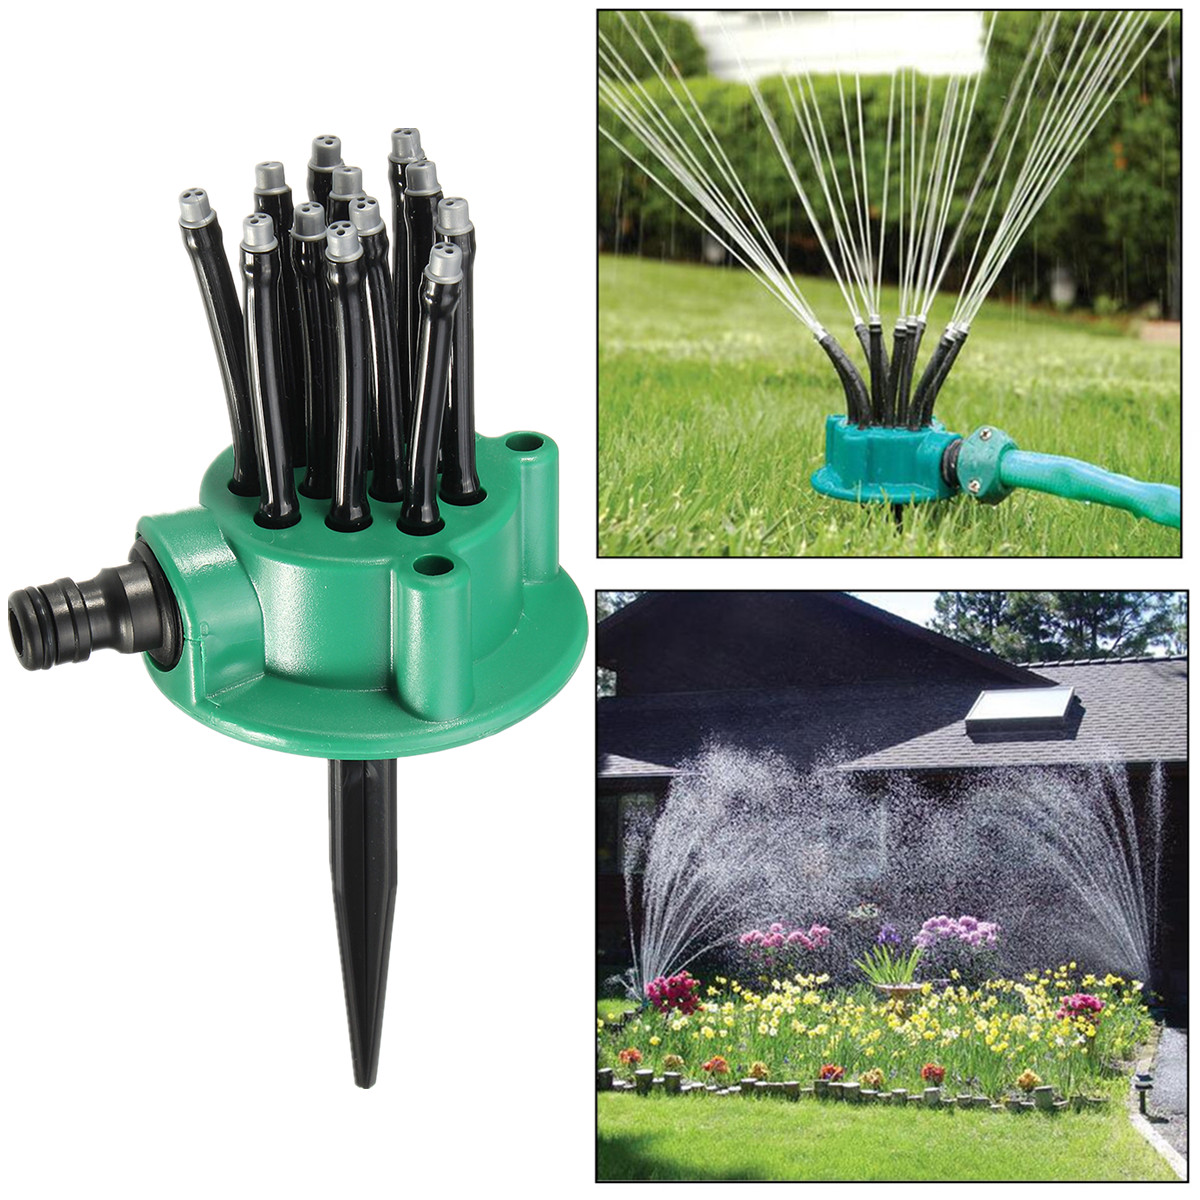 Upgarde-Flexible-Sprayer-Sprinkler-Noodlehead-Irrigation-Spray-Lawn-Garden-Yard-Watering-with-Stand-1545616-1